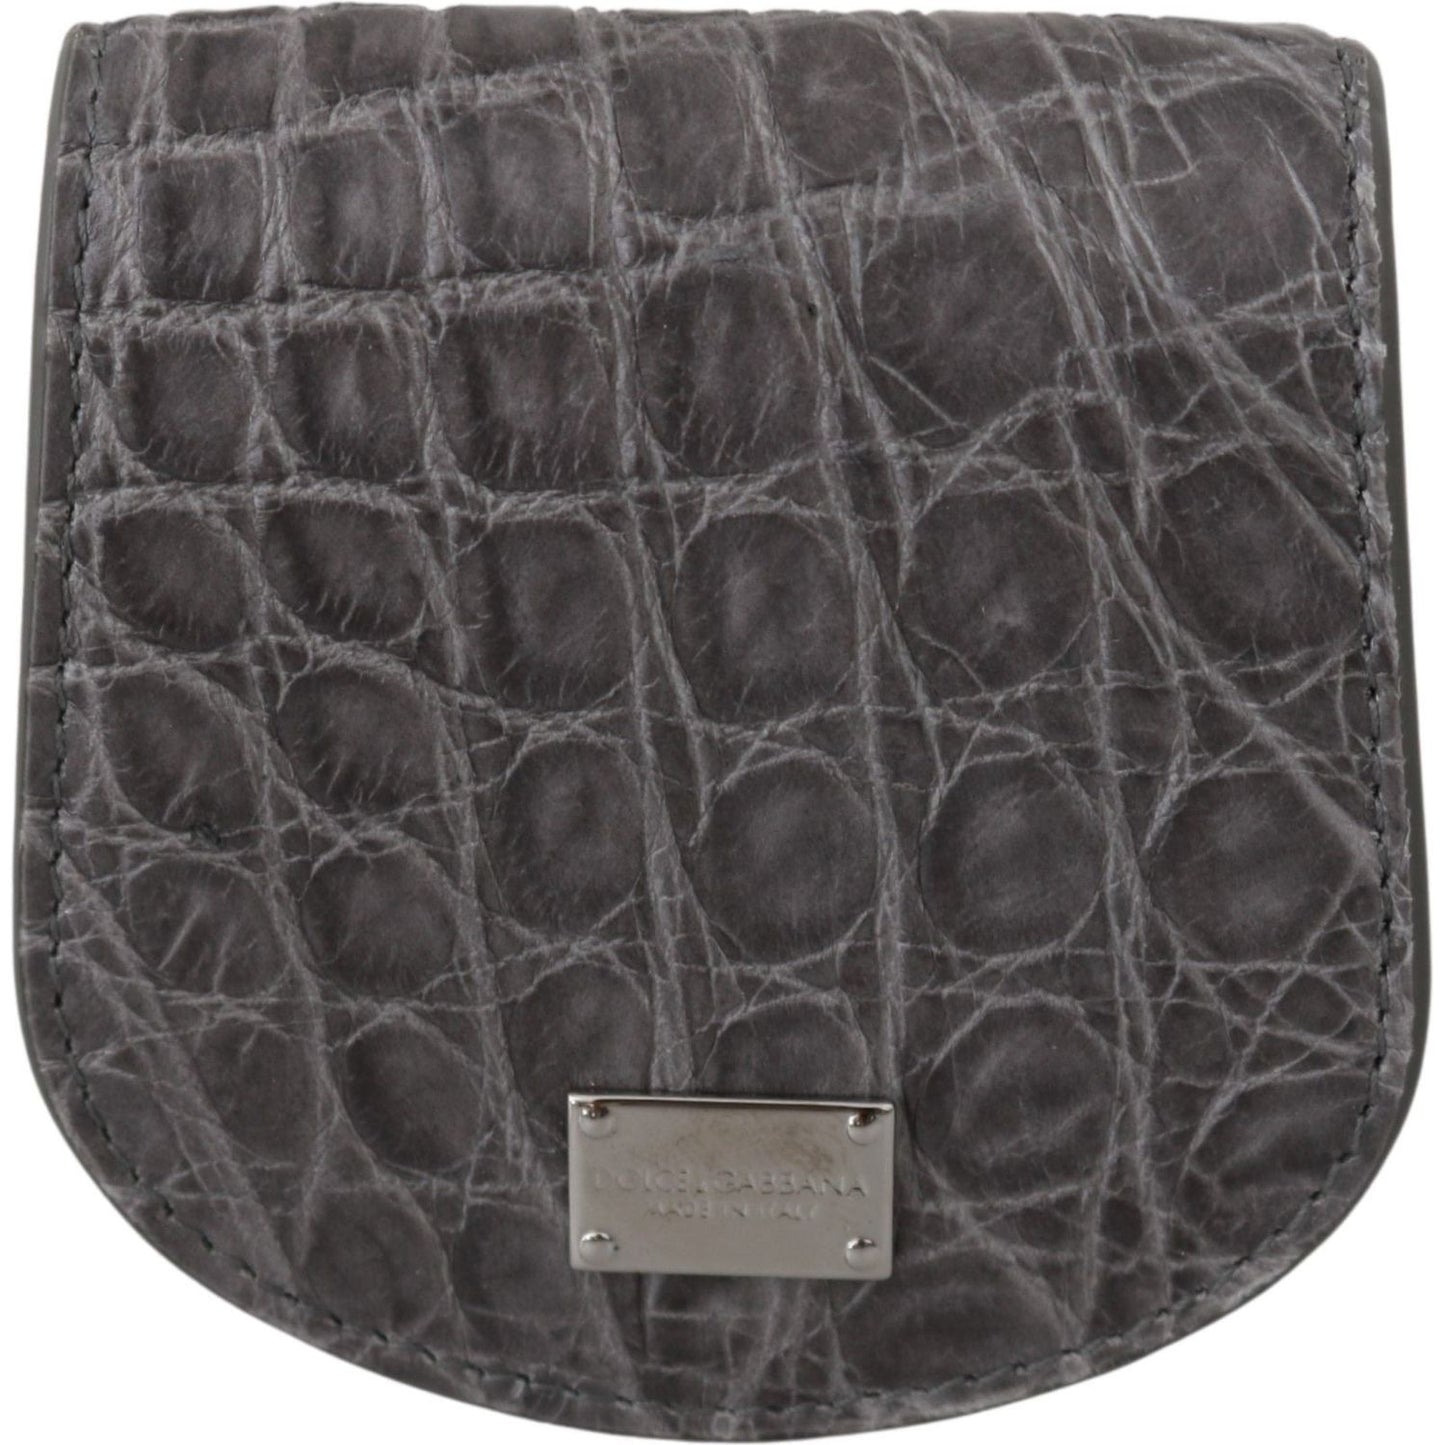 Dolce & Gabbana Exotic Gray Leather Condom Case Wallet Condom Case gray-exotic-skin-condom-case-holder-pocket-wallet IMG_0238-fa0c97d3-533.jpg